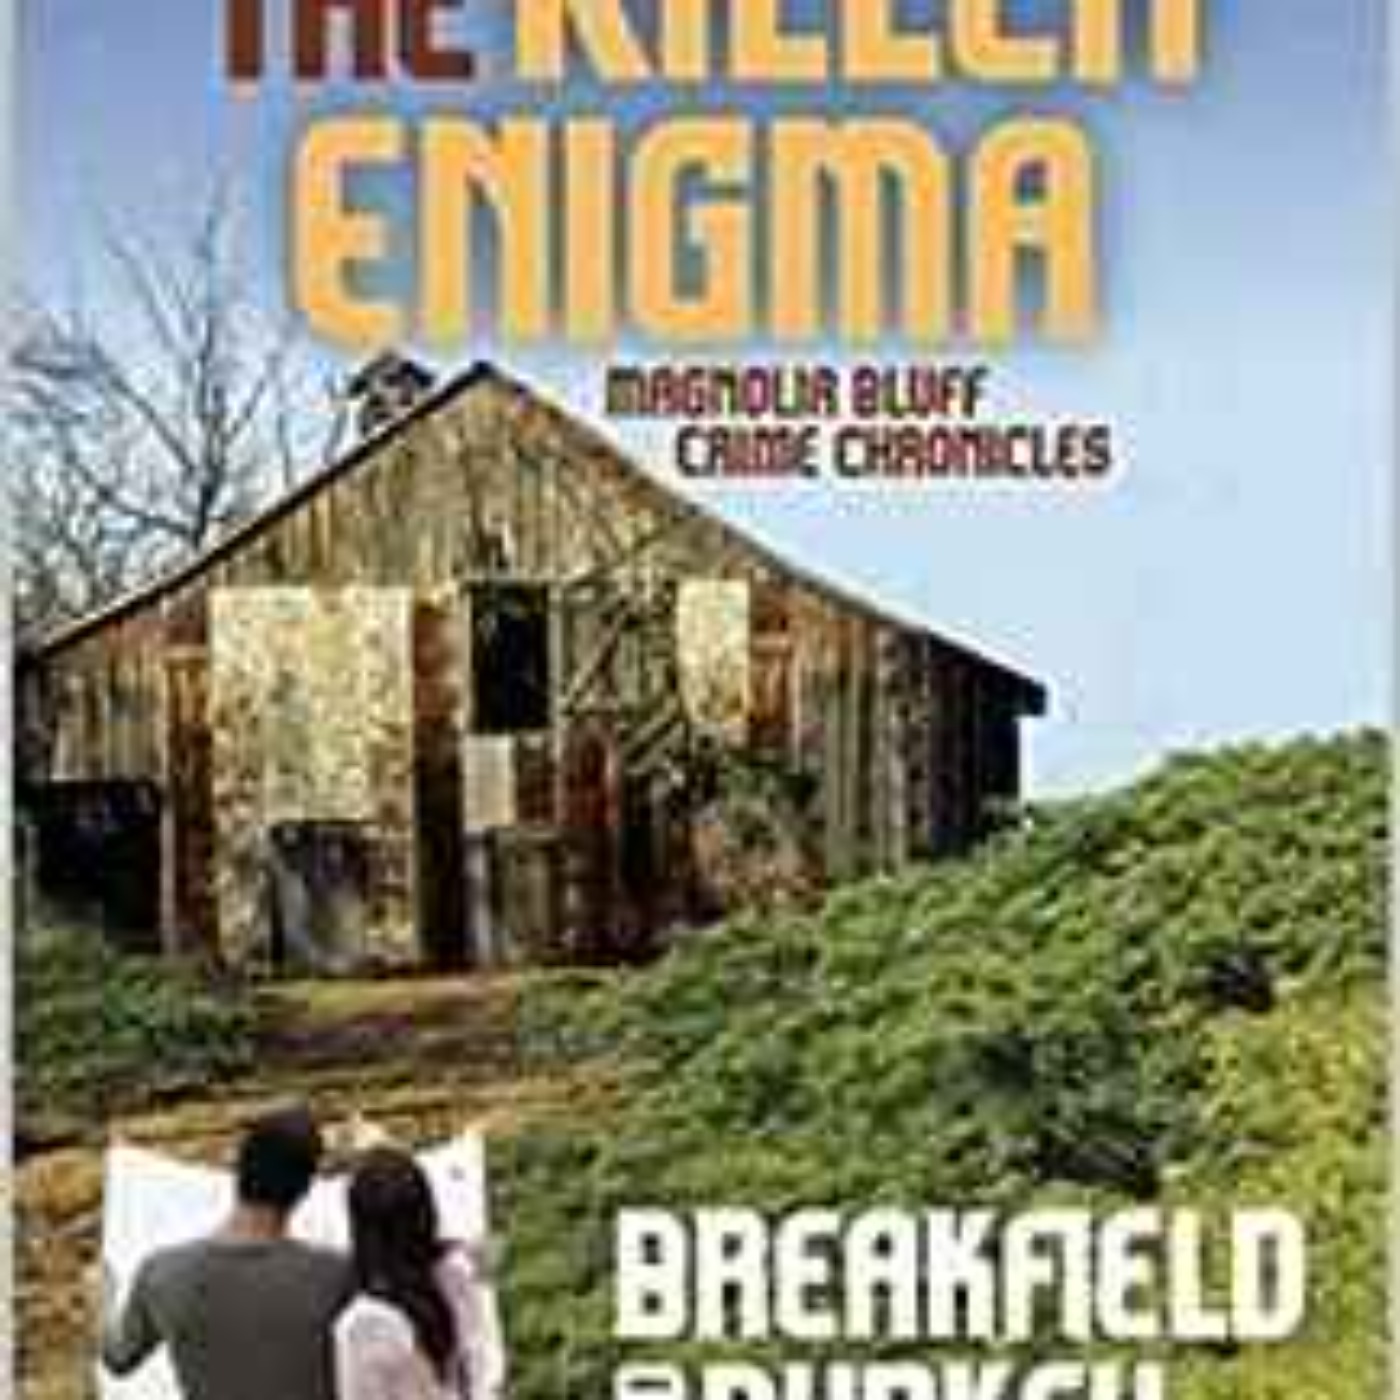 Charles Breakfield & Rox Burkey - The Killer Enigma: Magnolia Bluff Crime Chronicles-Book 16